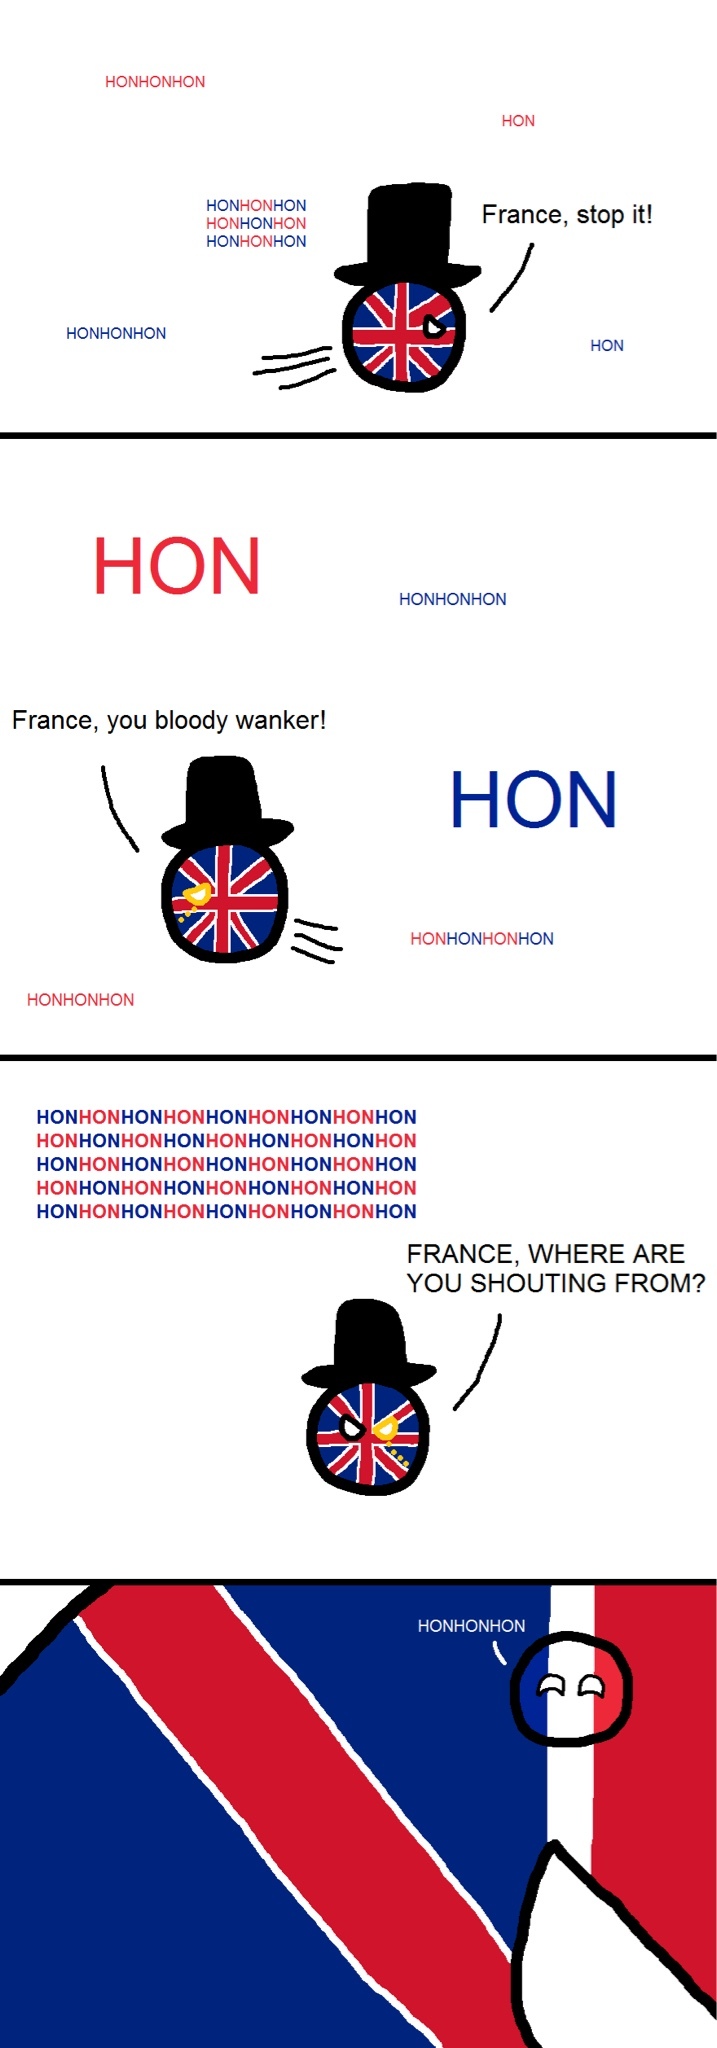 France stahp - meme